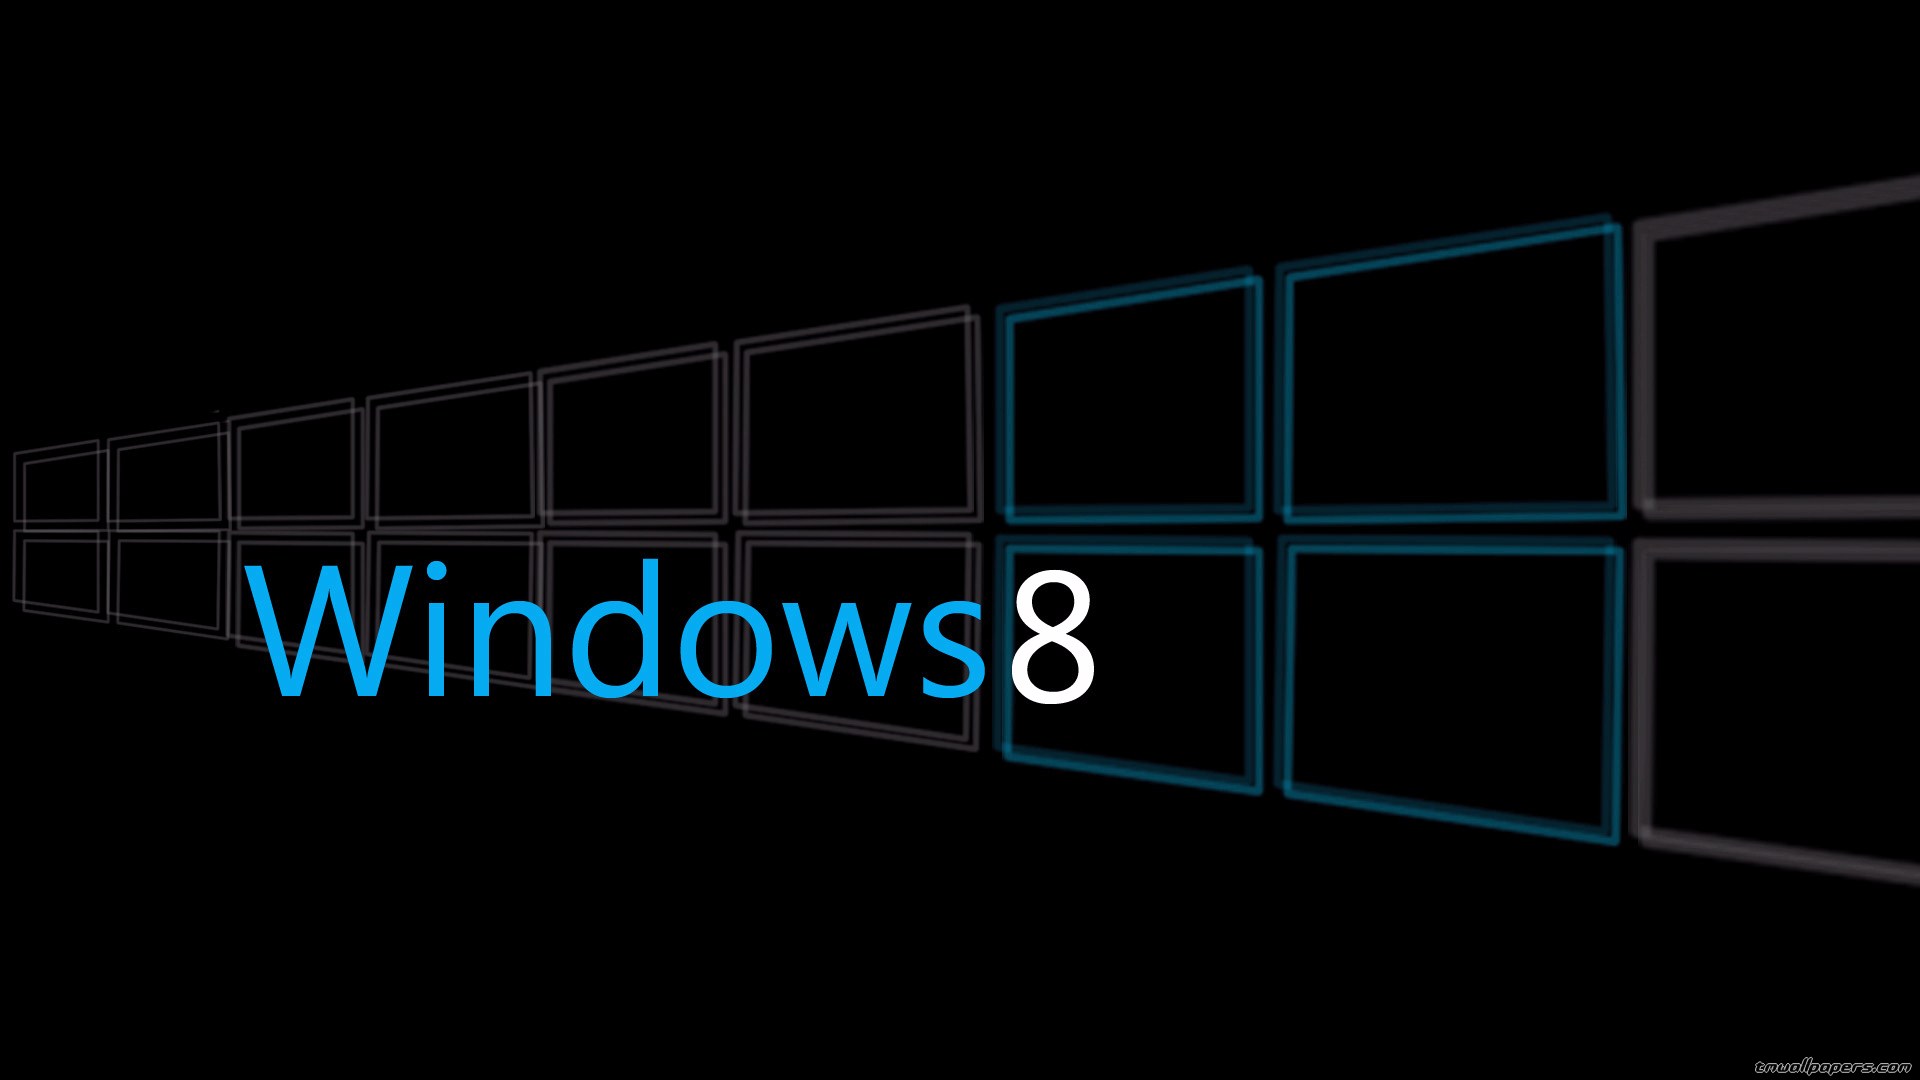 windows 8 logo black background